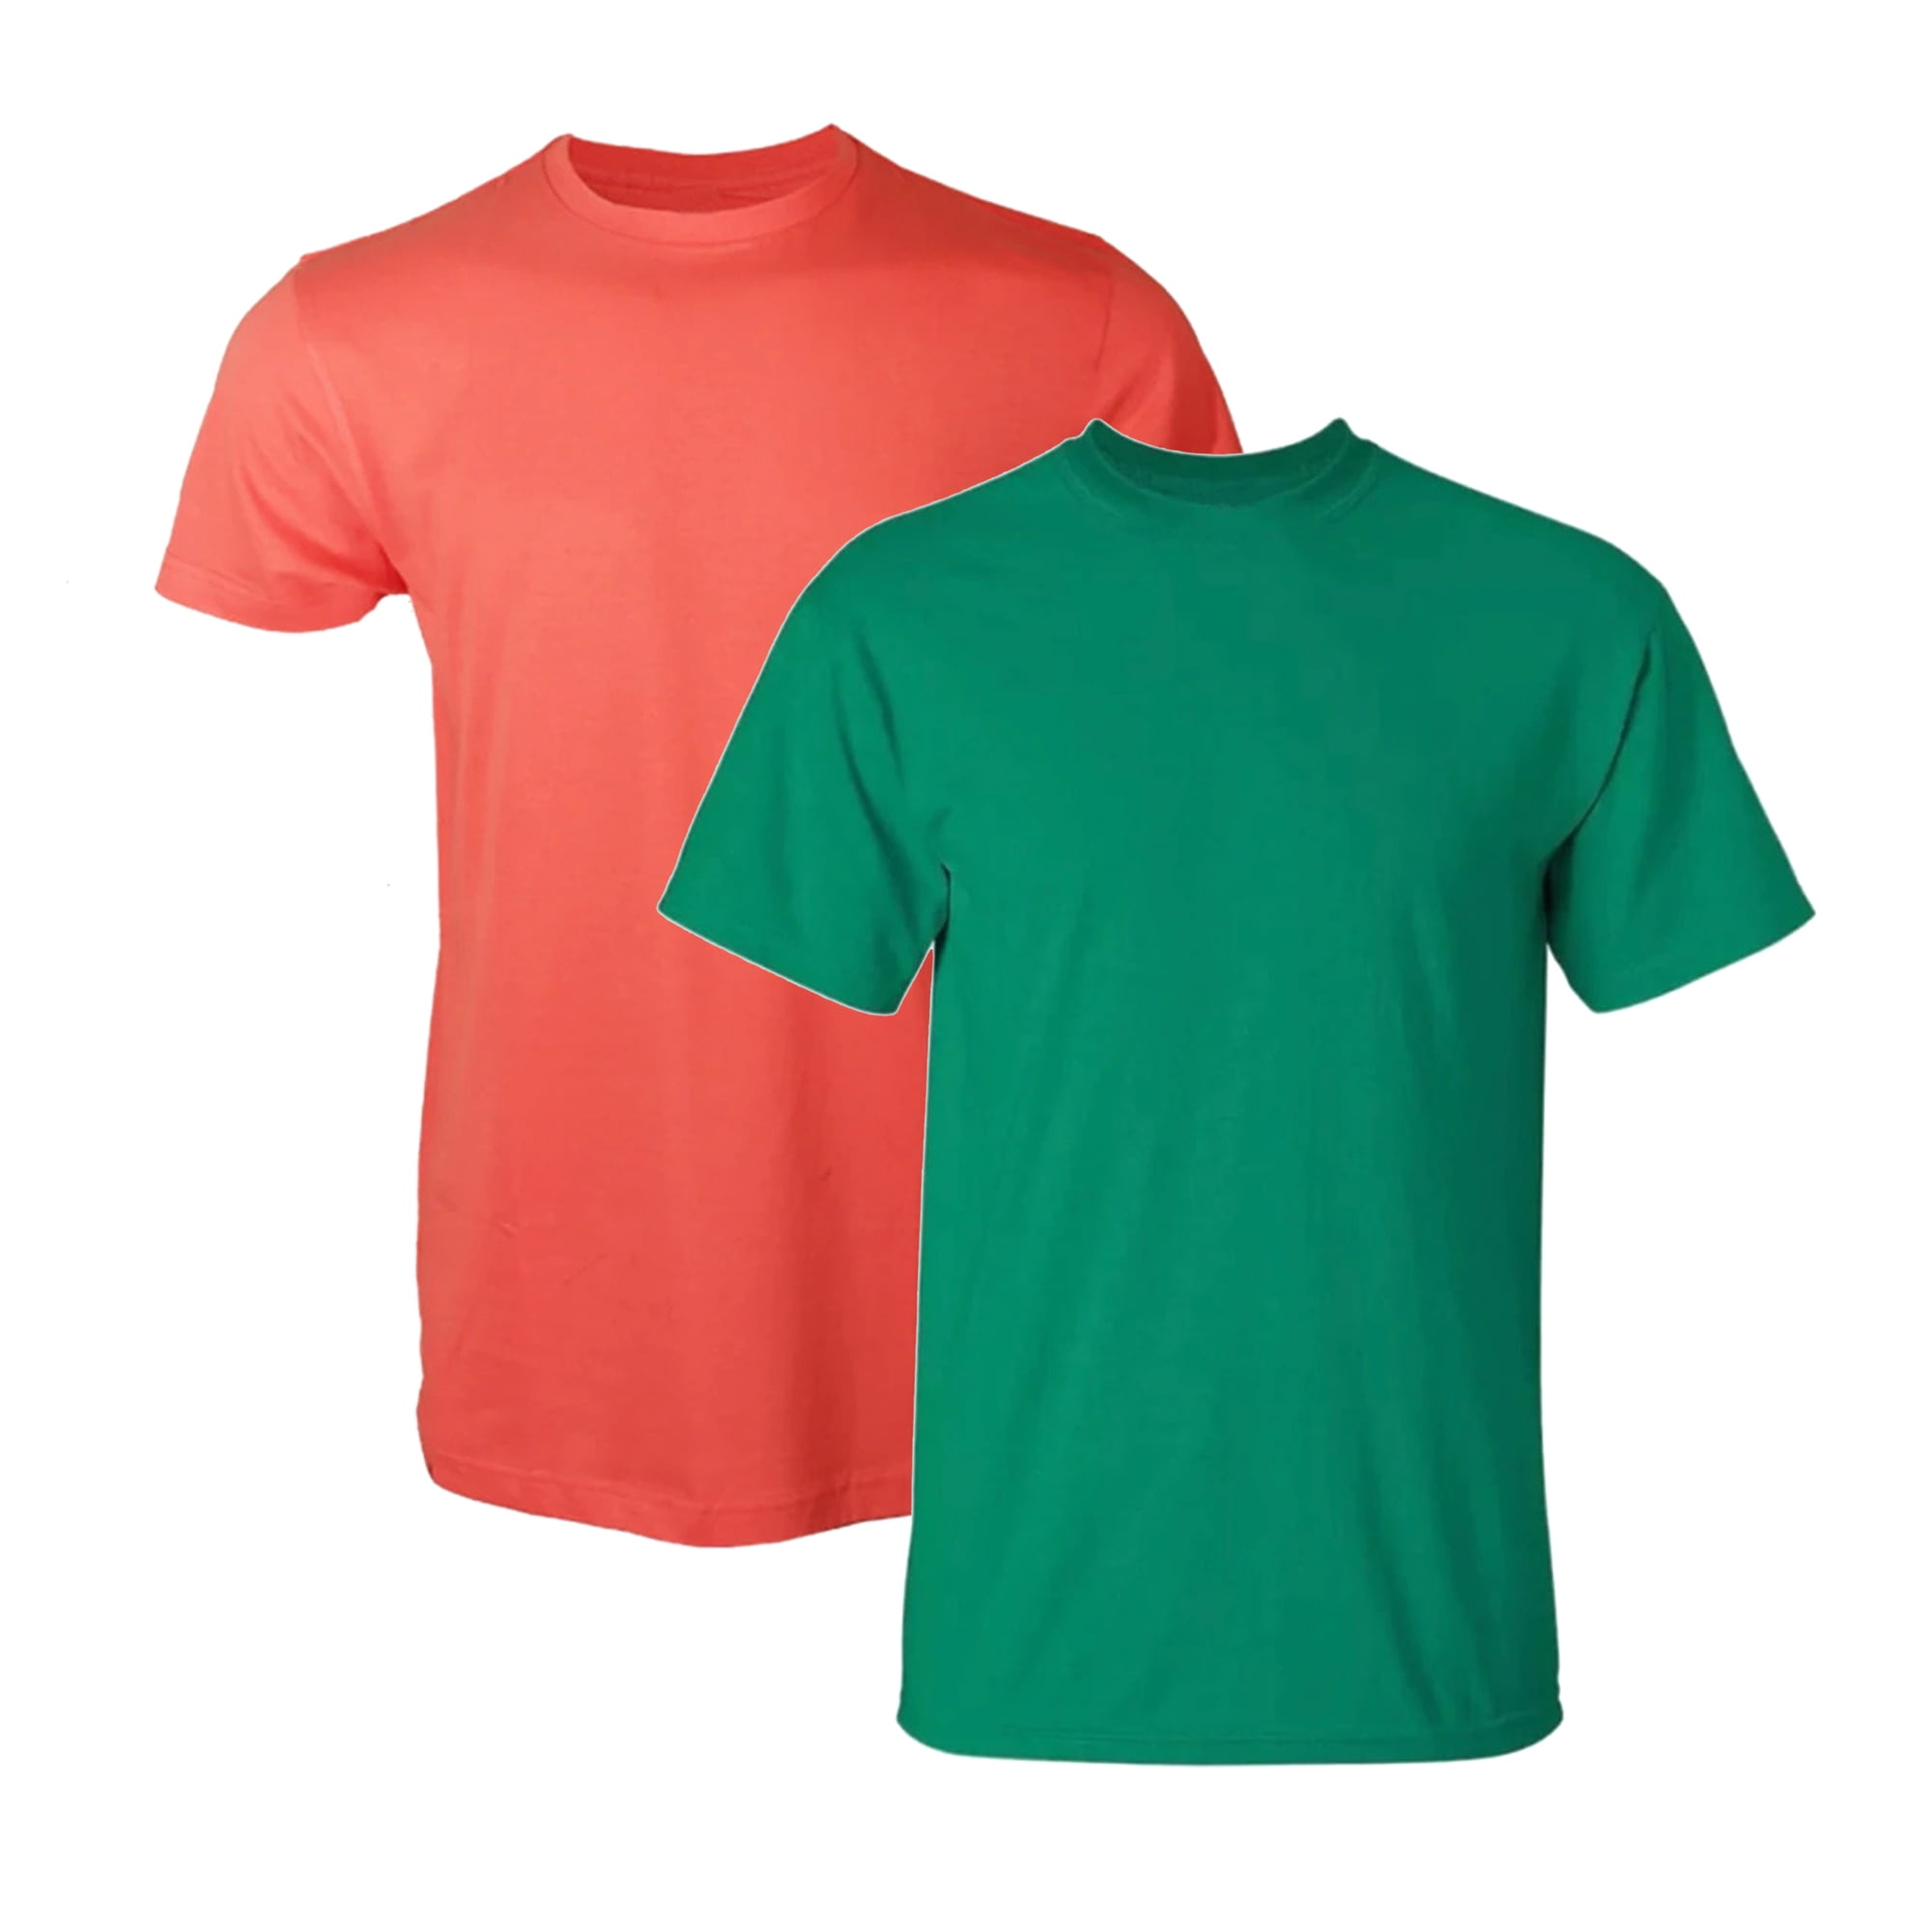 Radyan's Men's Crew Ultra Soft Plain Short-Sleeve Adult Value T-Shirts ...